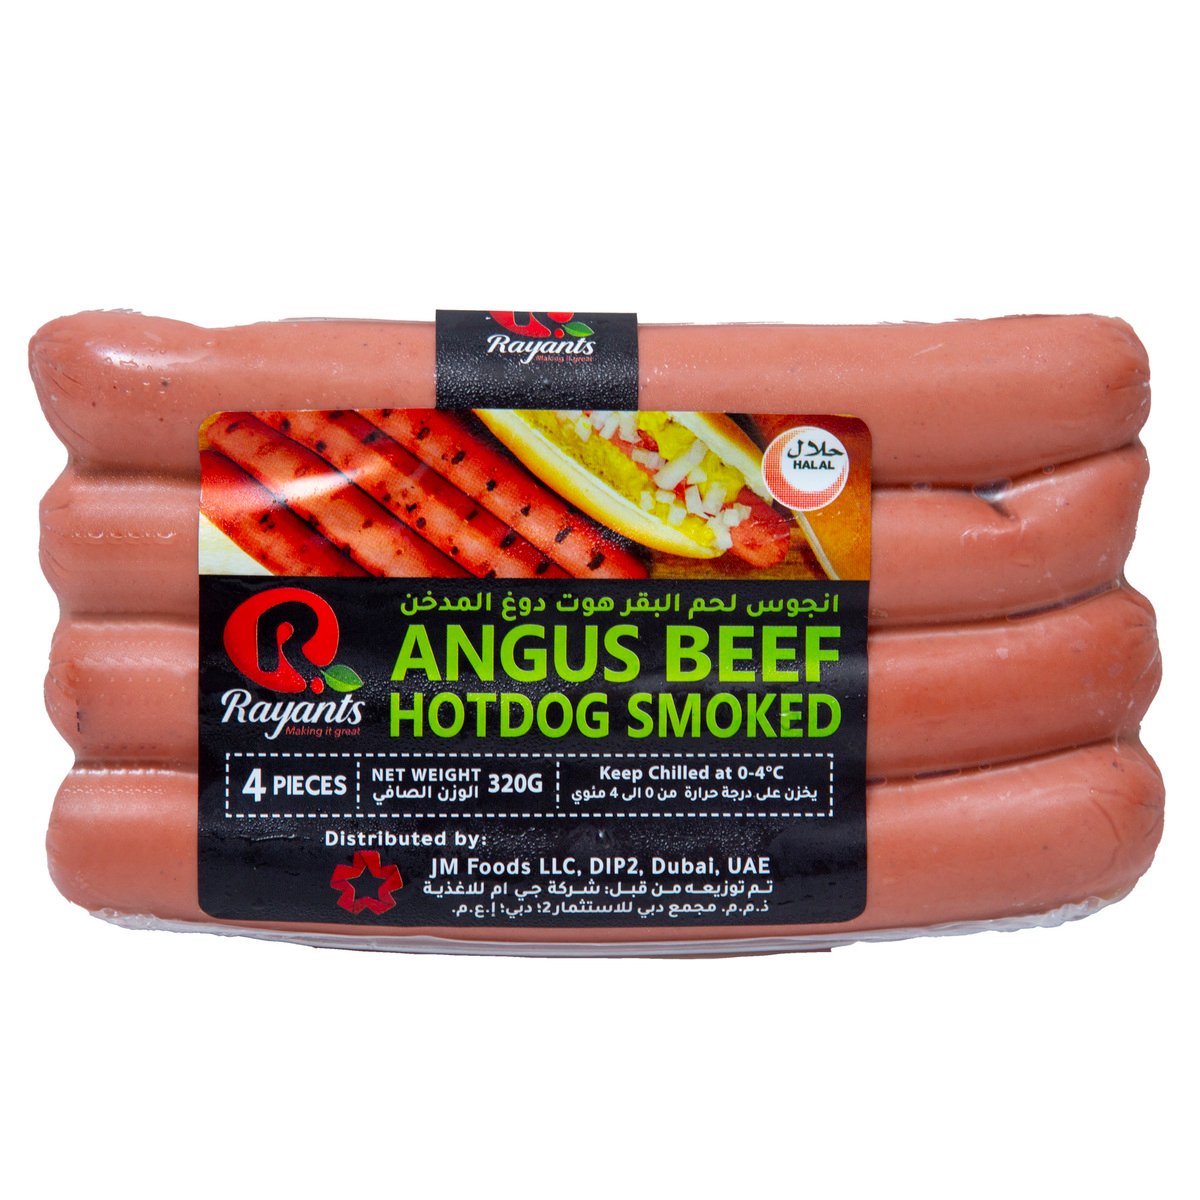 Rayants Angus Beef Hot Dog Smoked 4 pcs